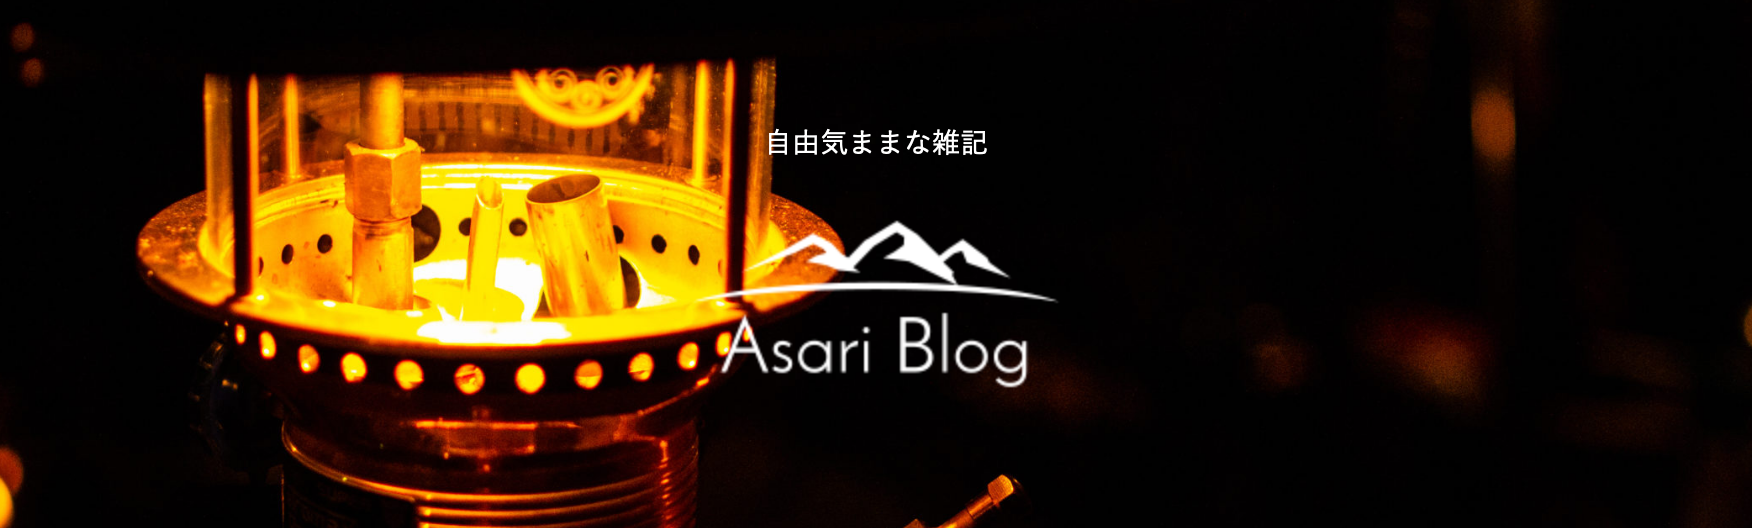 Logo Garden 手順解説 無料で簡単おしゃれロゴ作成 Asari Blog アサリブログ